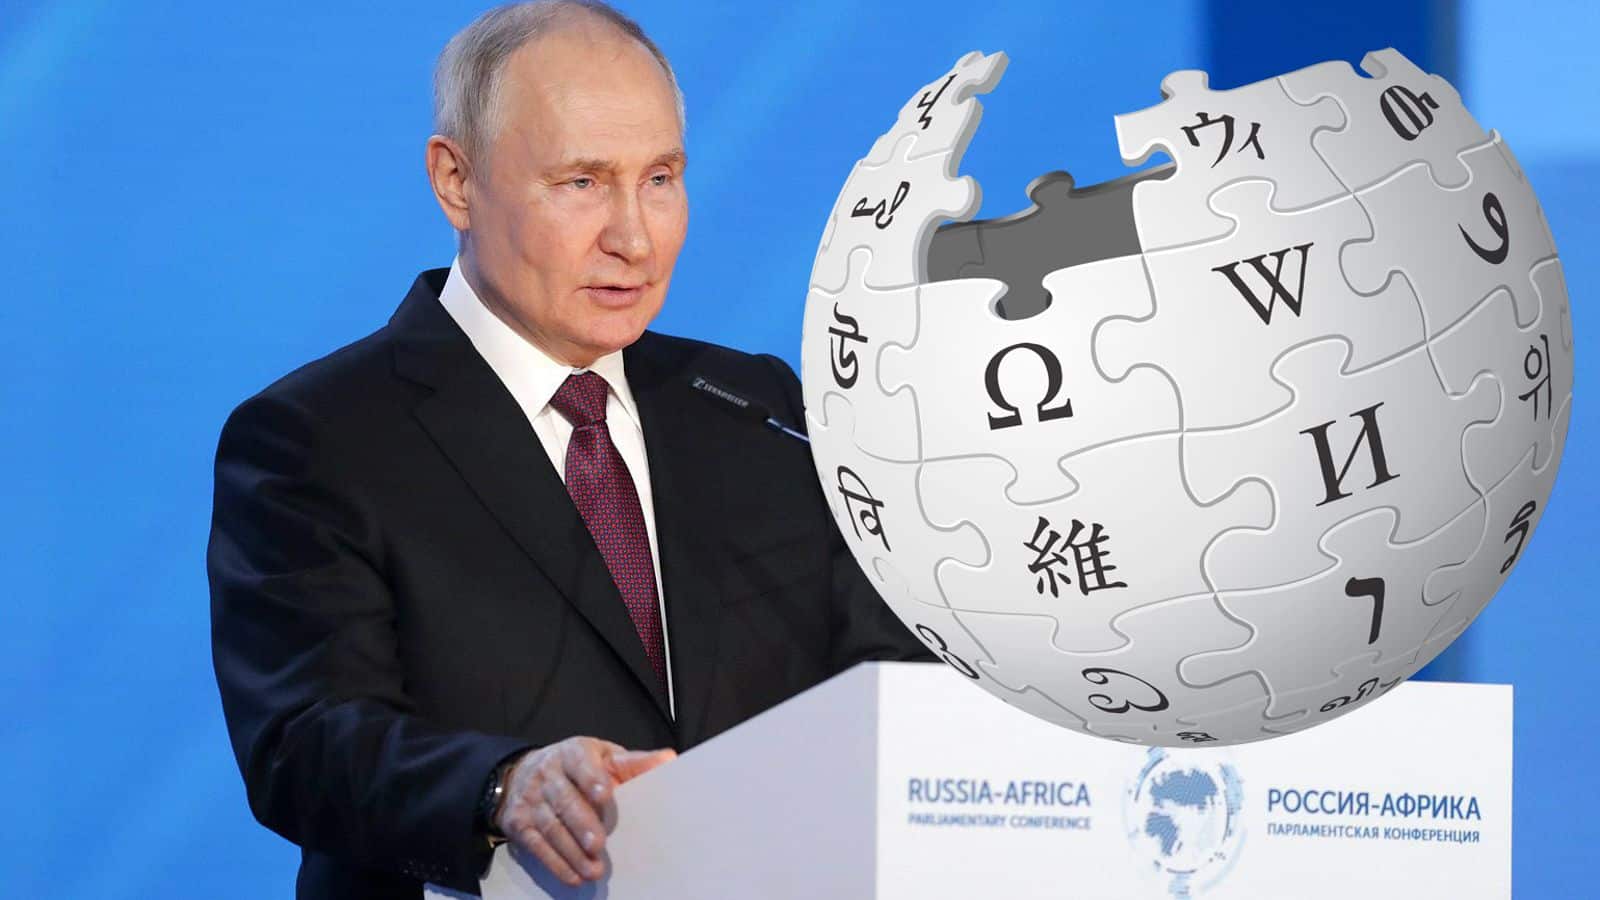 Meet Ruviki: Russia's state-controlled version of Wikipedia